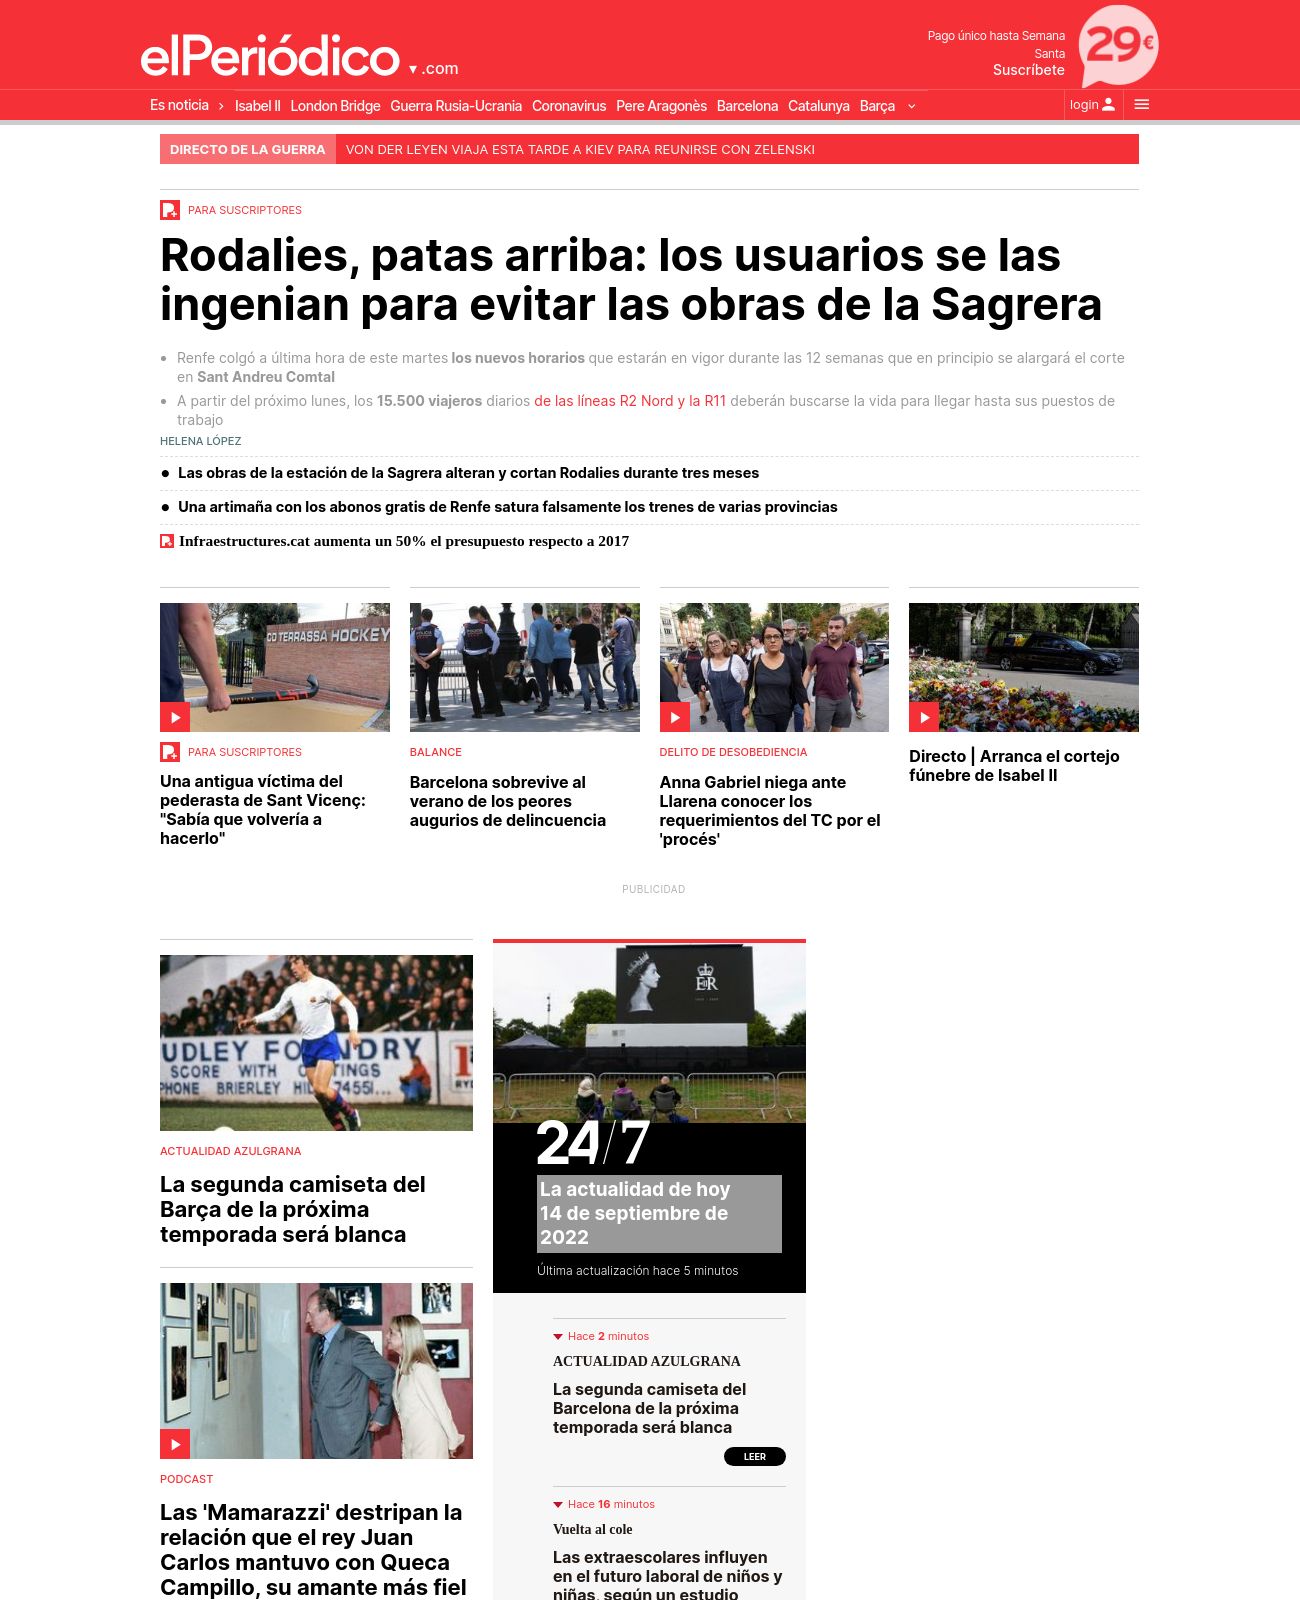 El Periodico at 2022-09-14 17:19:55+02:00 local time